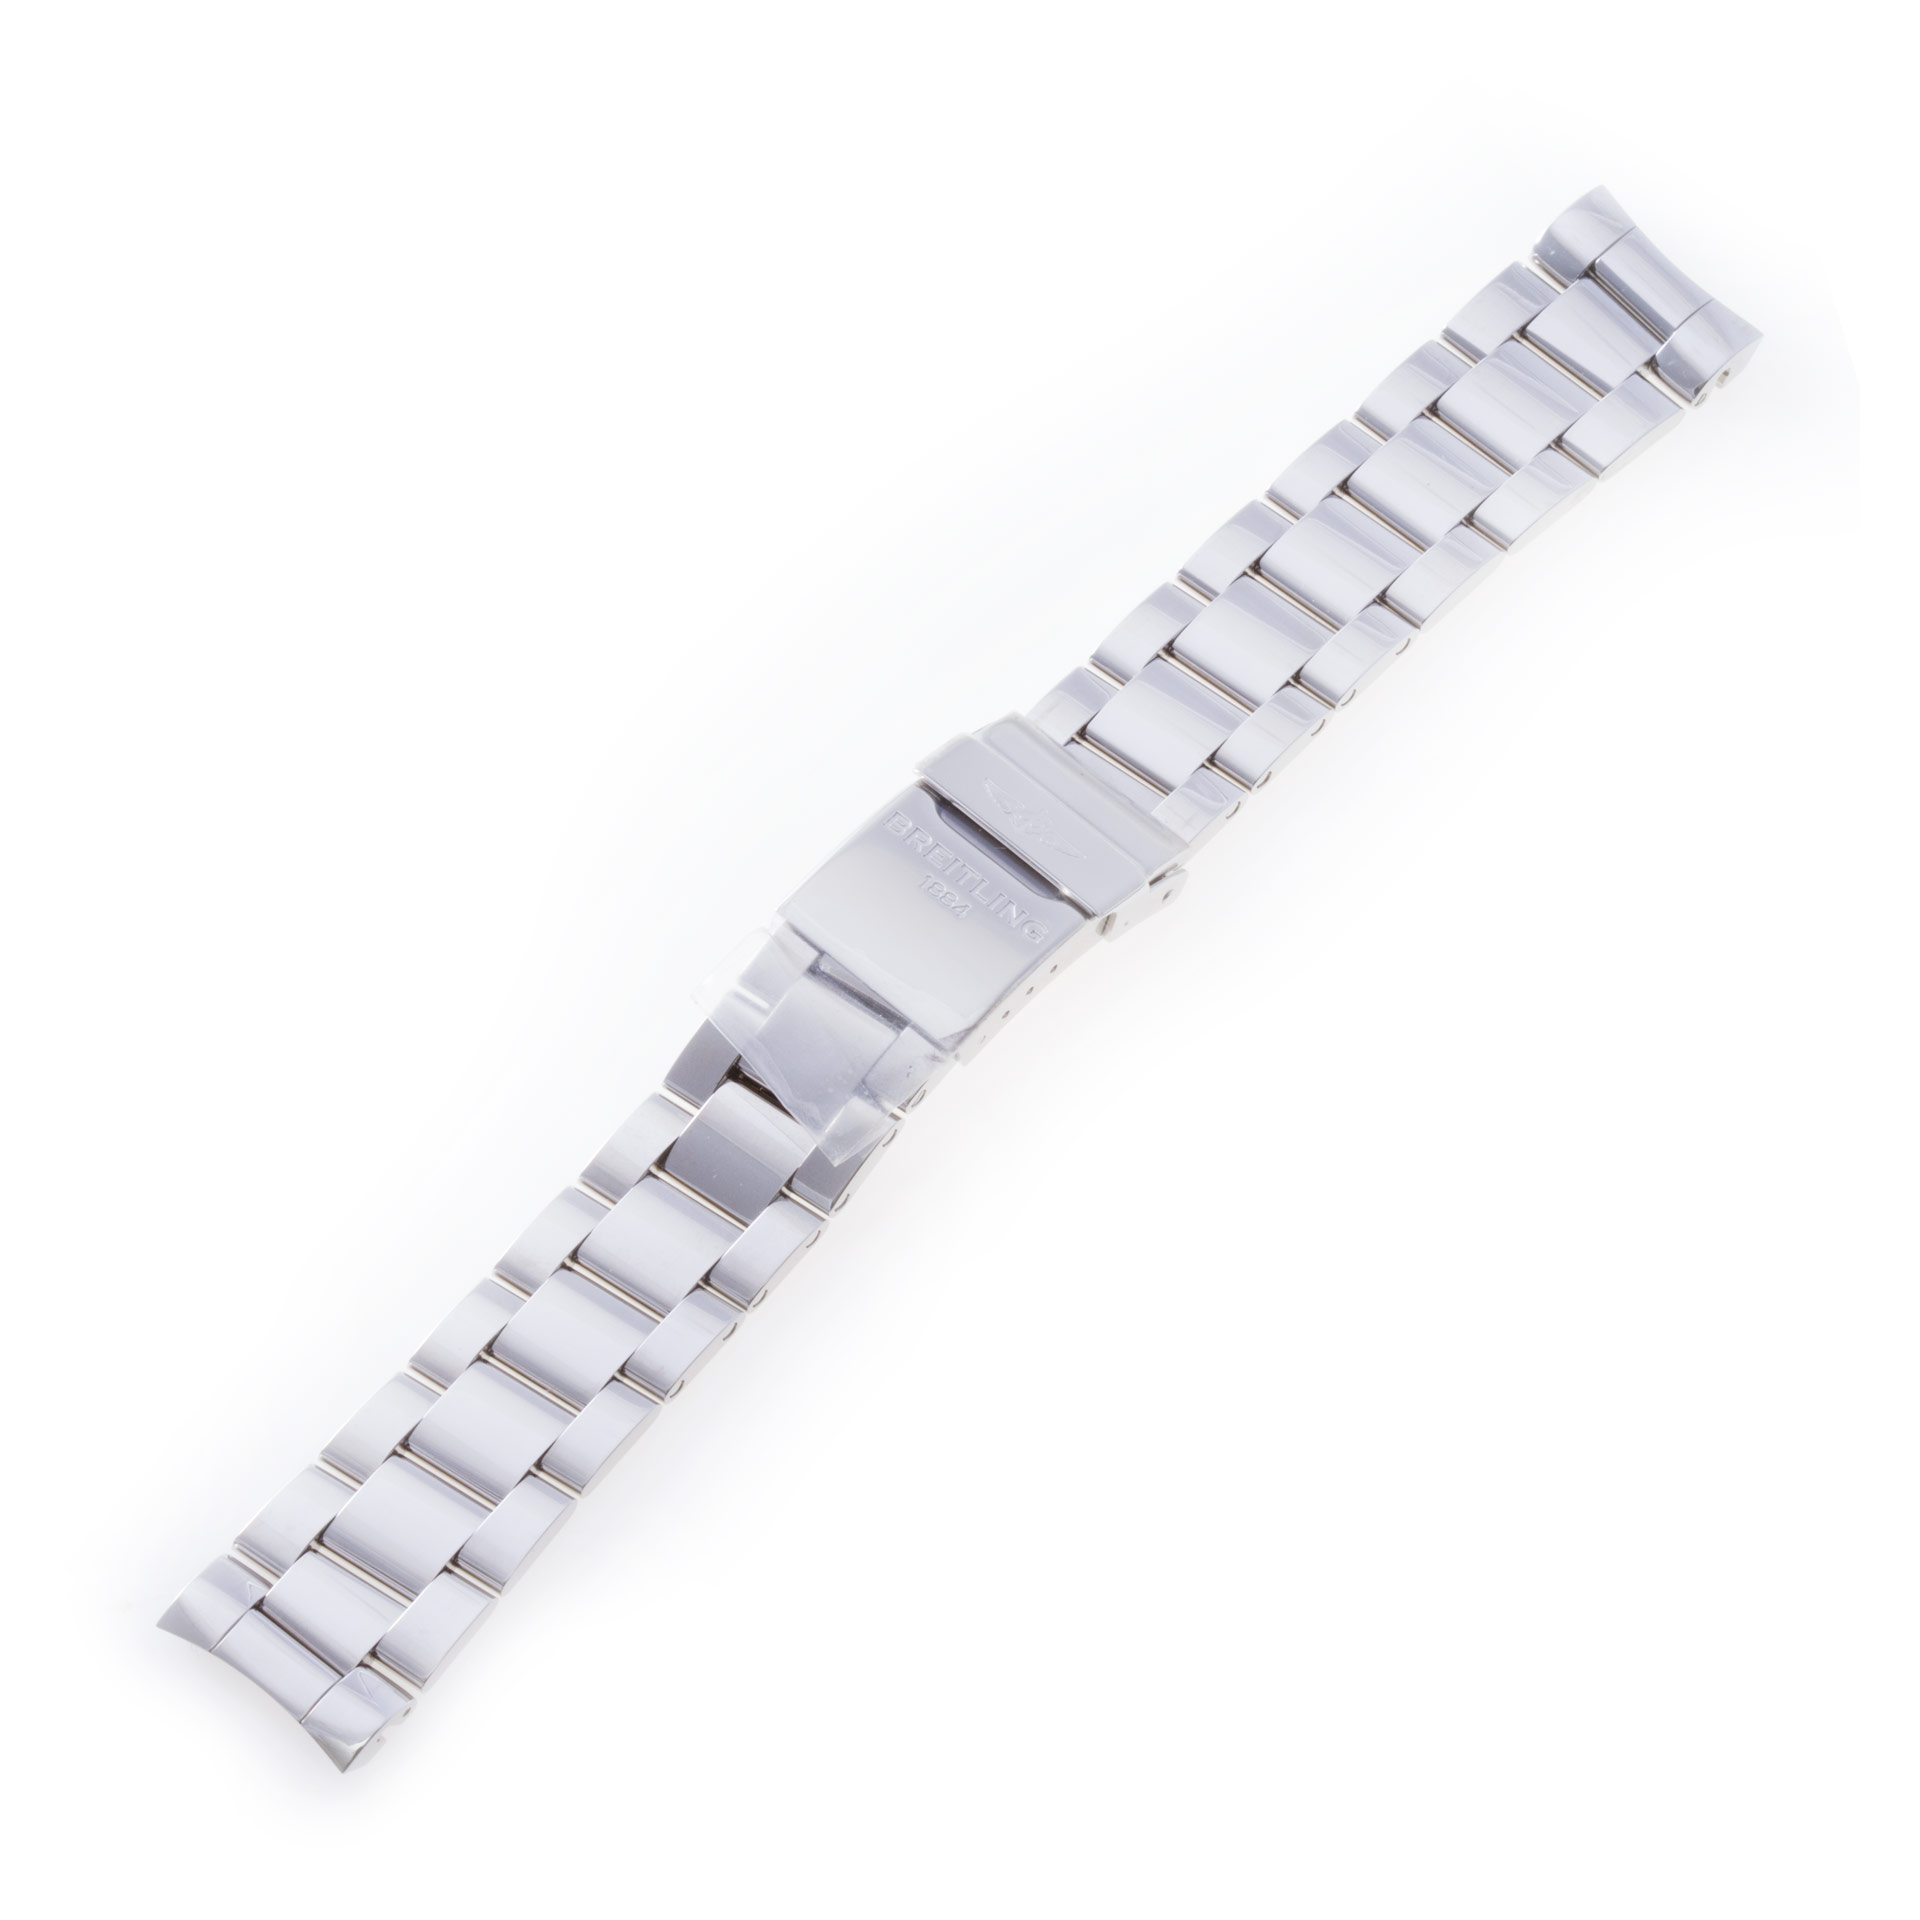 Breitling 22mm professional chrono colt stainless steel bracelet